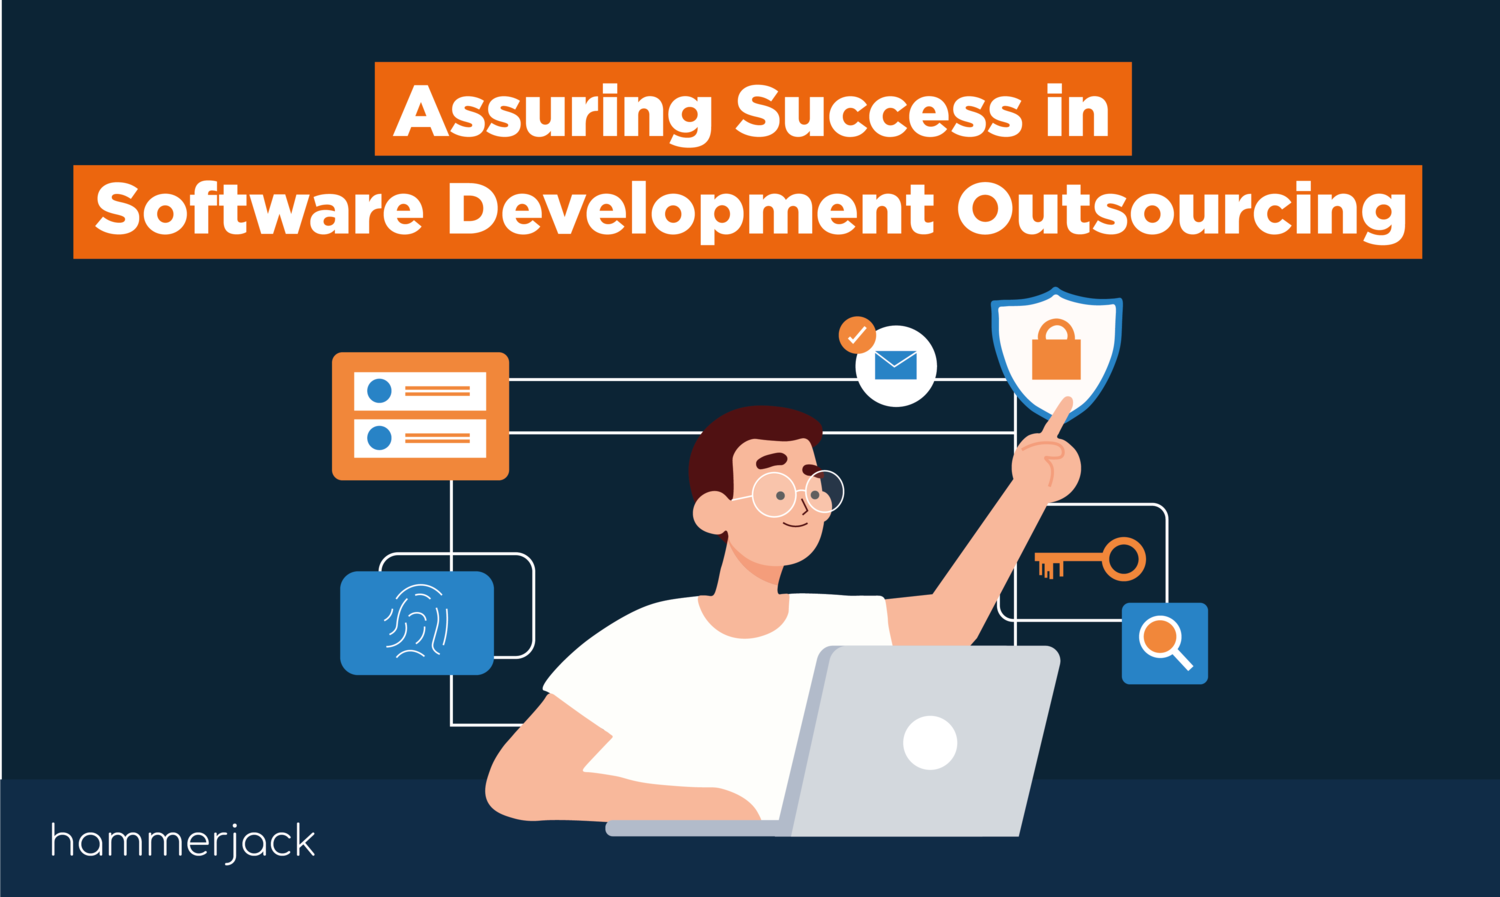 Assuring Success in Software Development Outsourcing - hammerjack